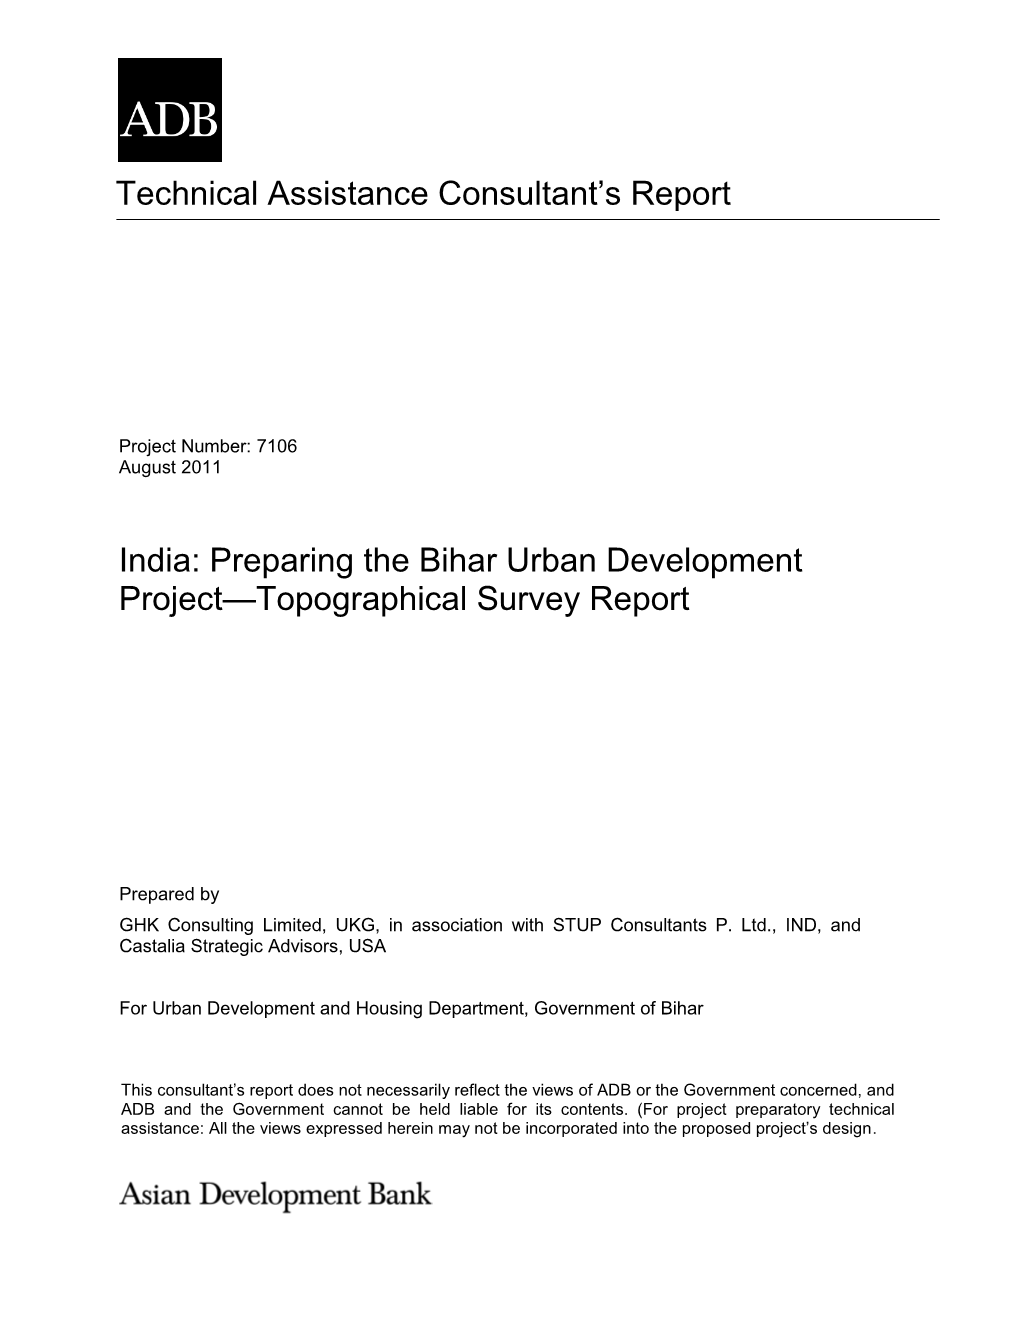 Bihar Urban Development Investment Program: Topographical Survey